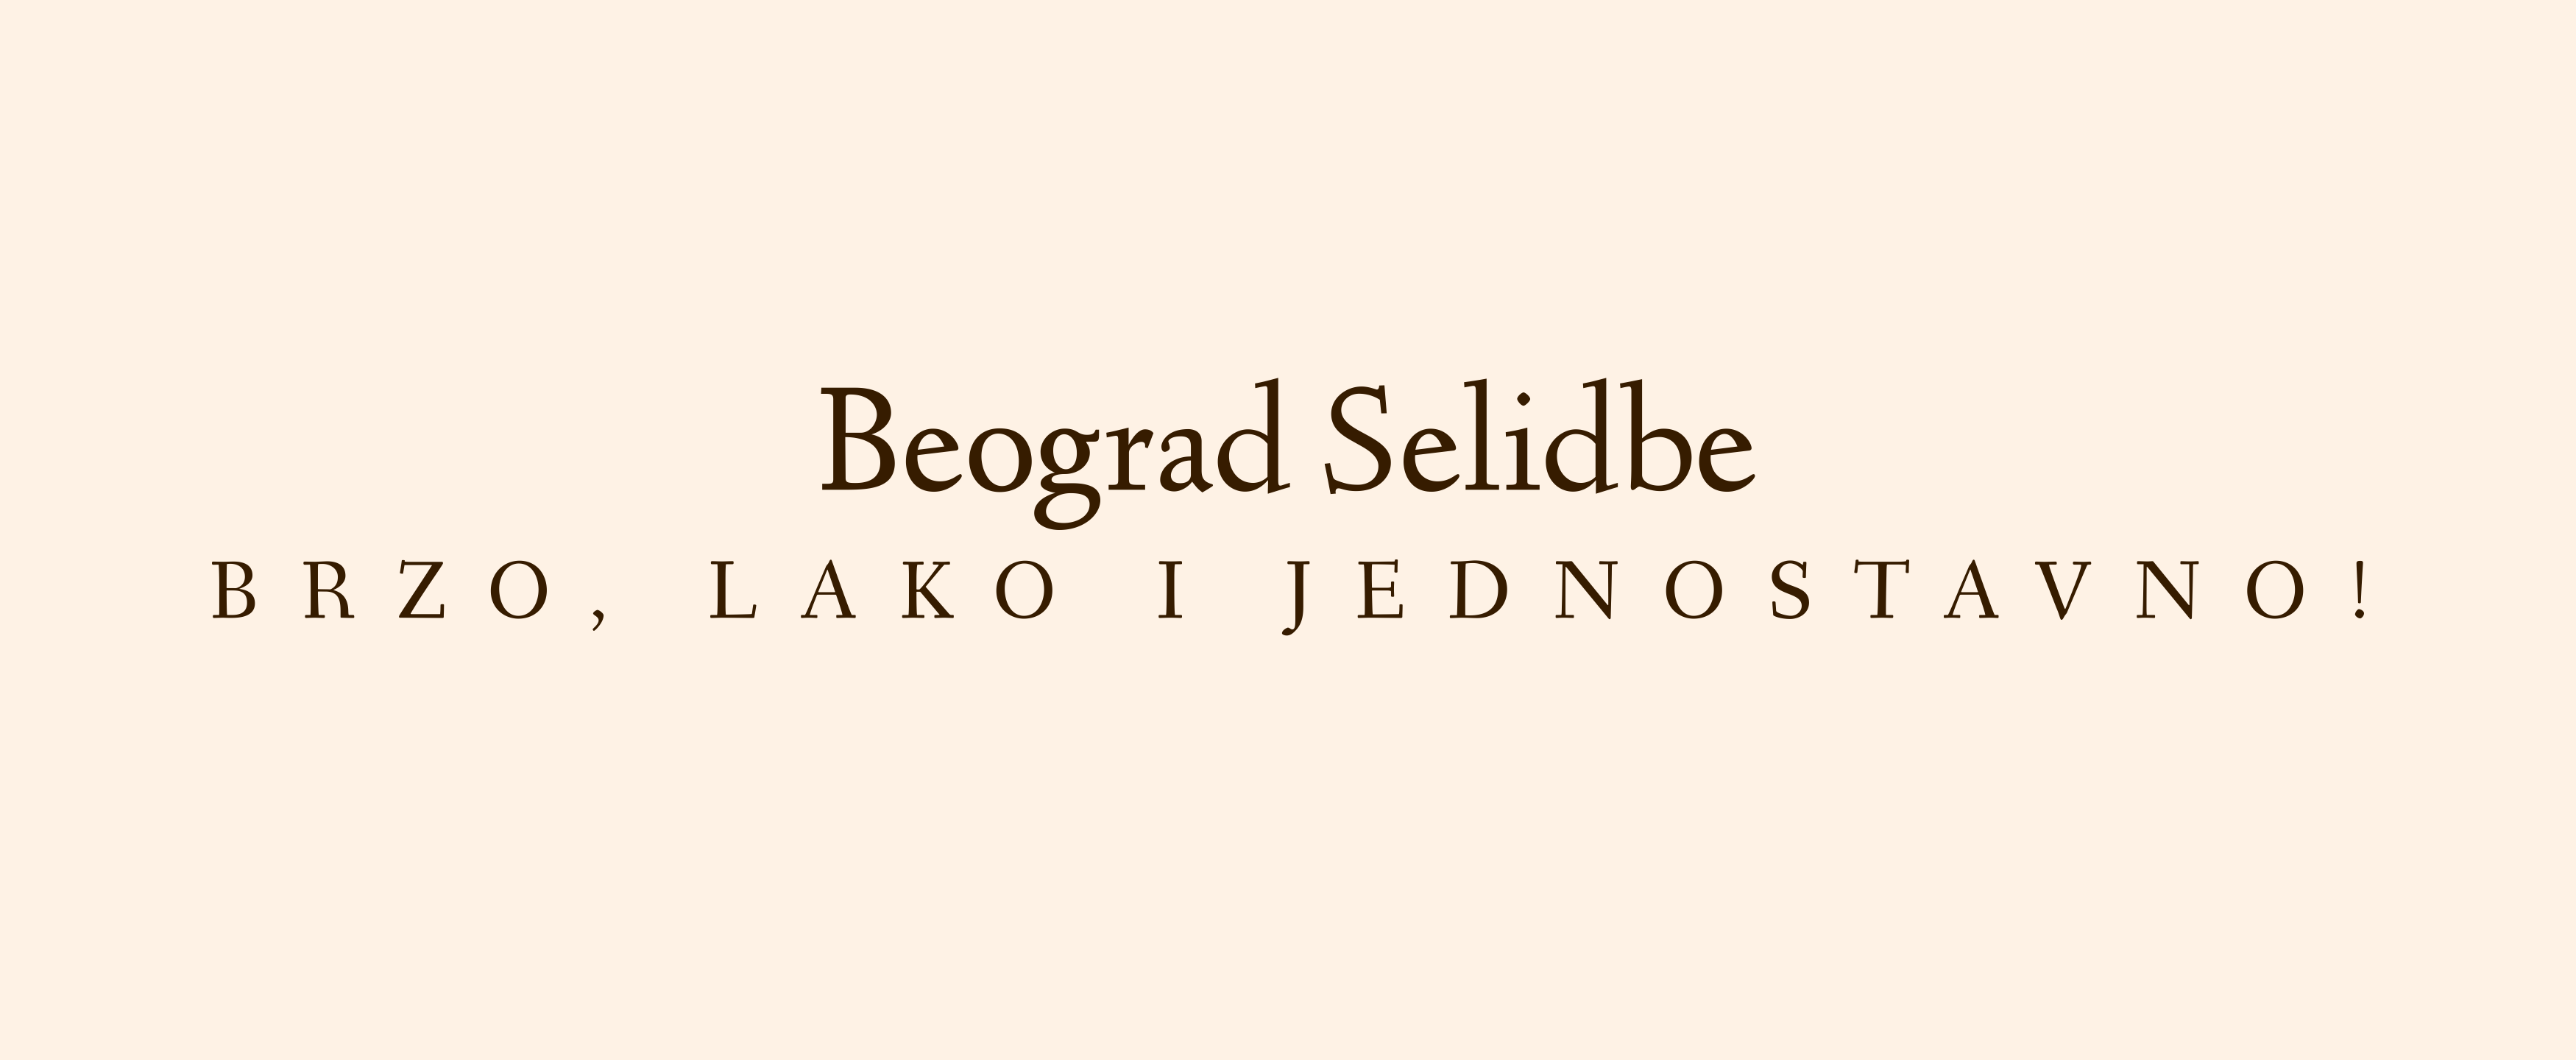 Selidbe Beograd Ulcinj